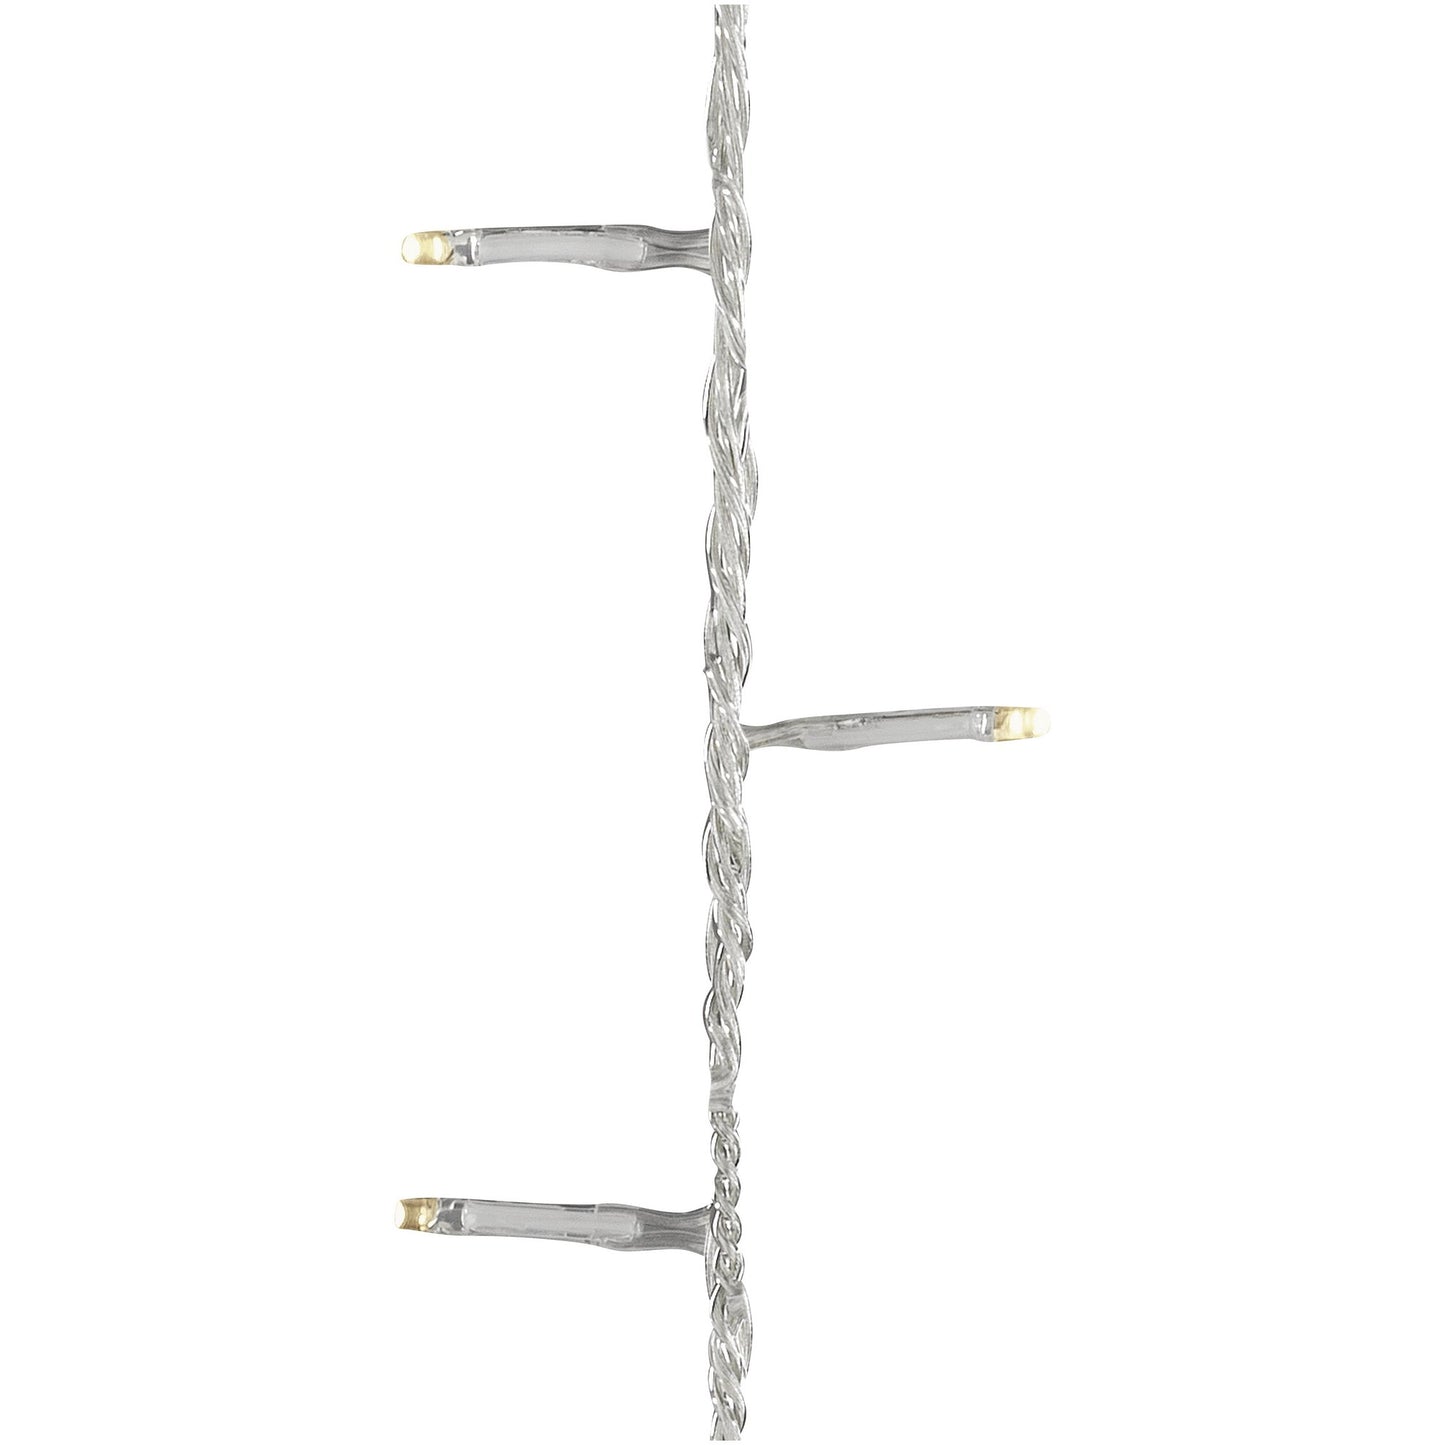 Lichterkette Basic 360 LED 27 m warm weiß, transparentes Kabel